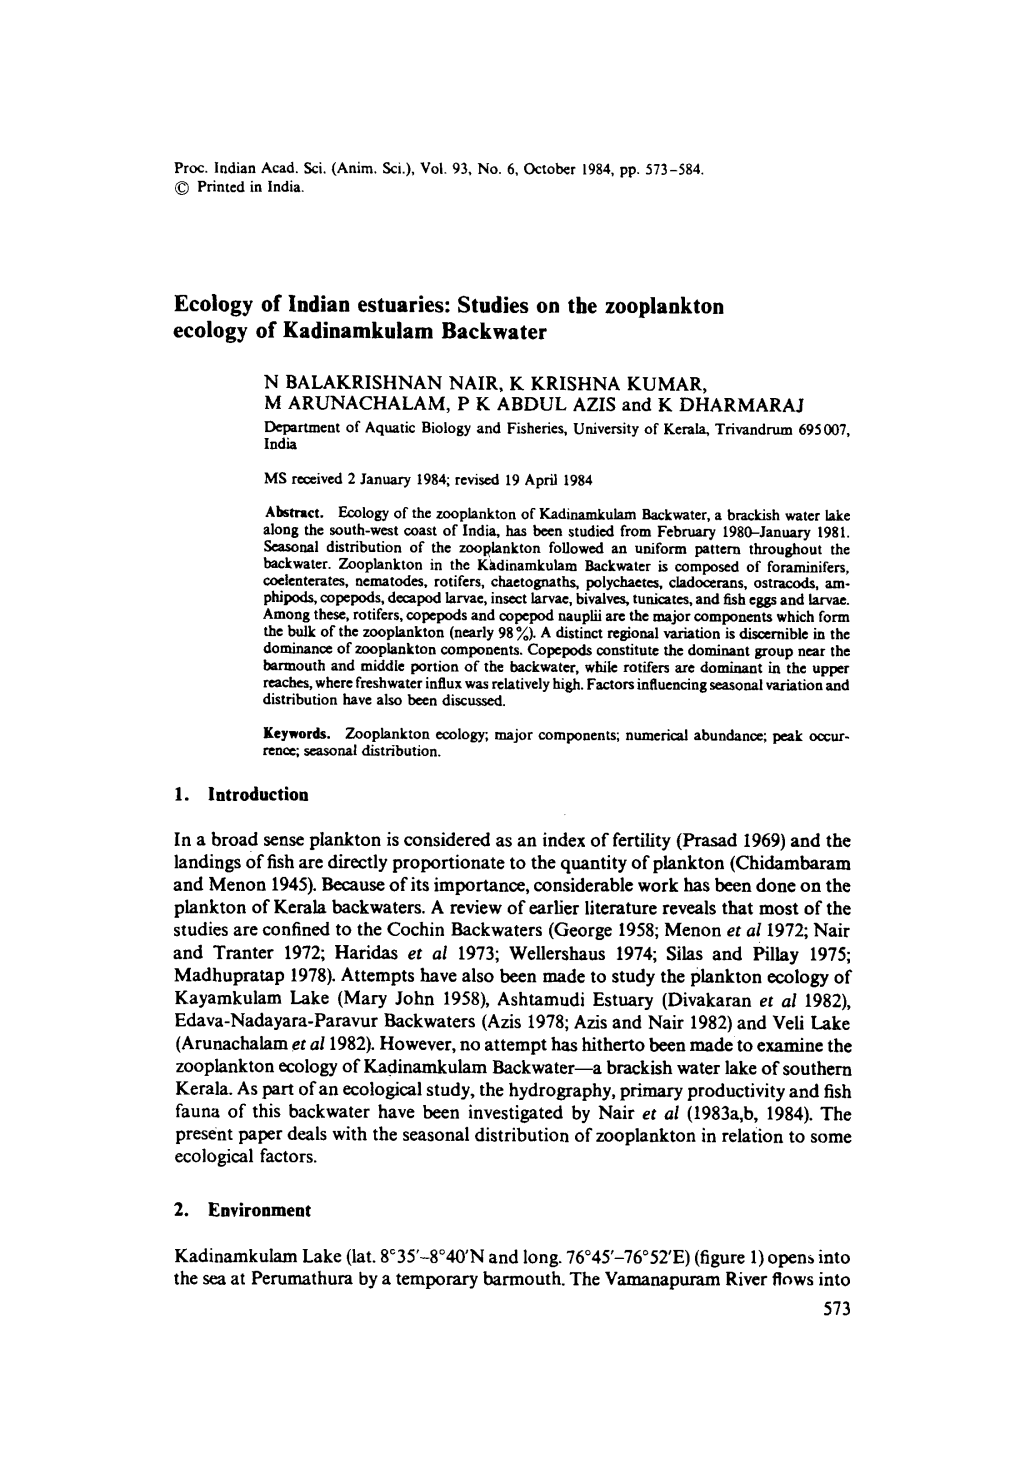 Studies on the Zooplankton Ecology of Kadinamkulam Backwater